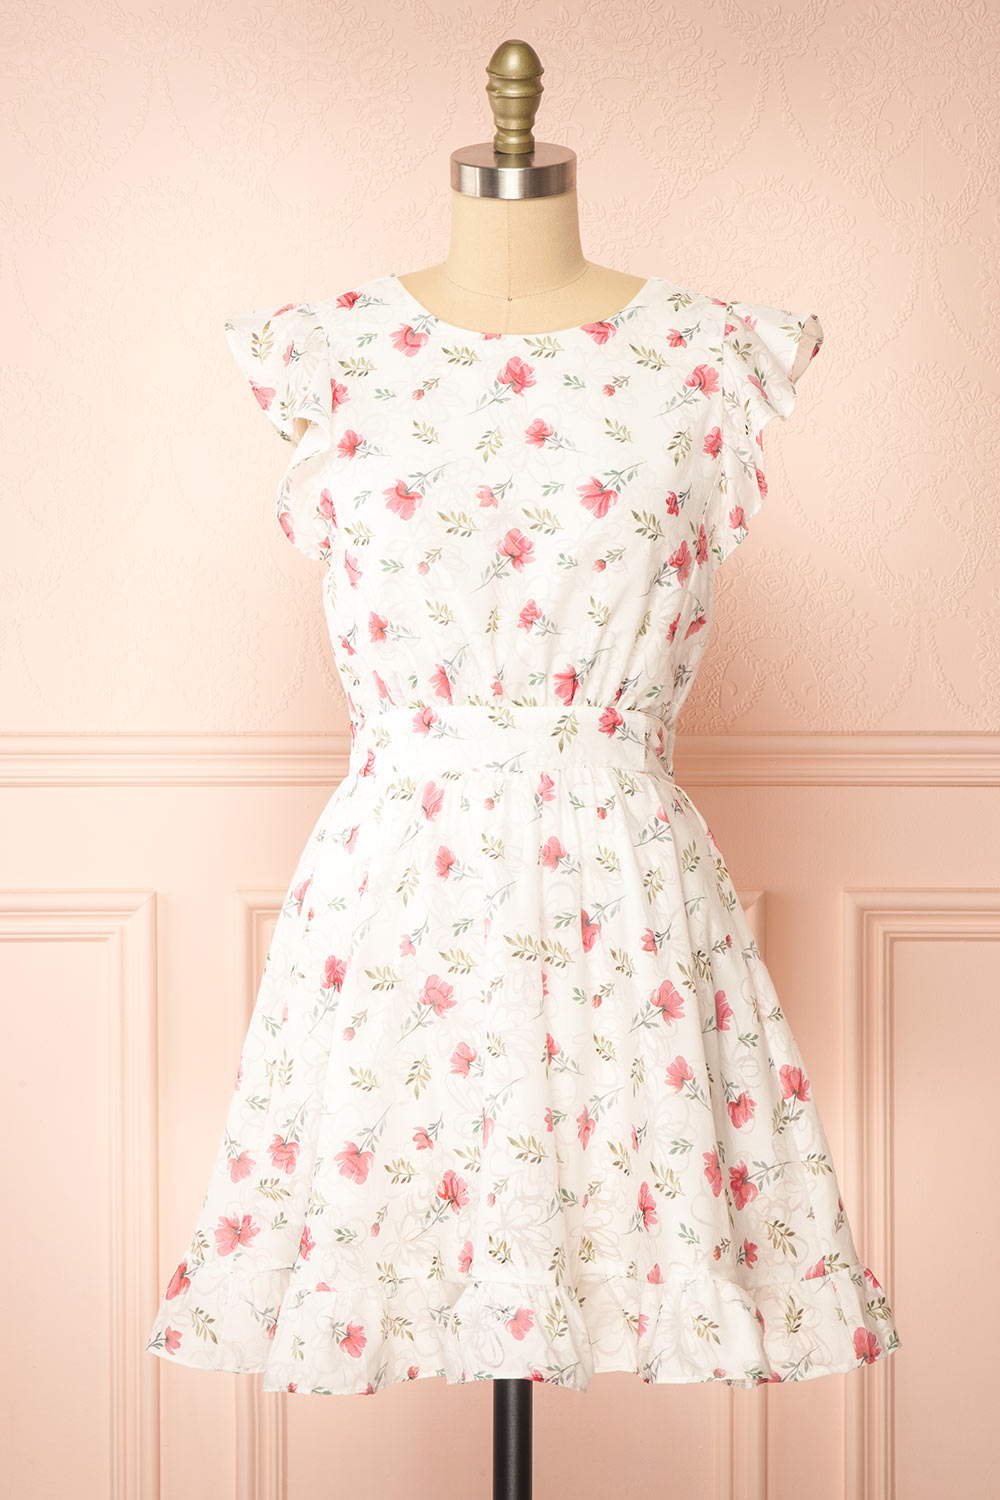 Prunne Short White Floral Dress w/ Open Back | Boutique 1861 front view